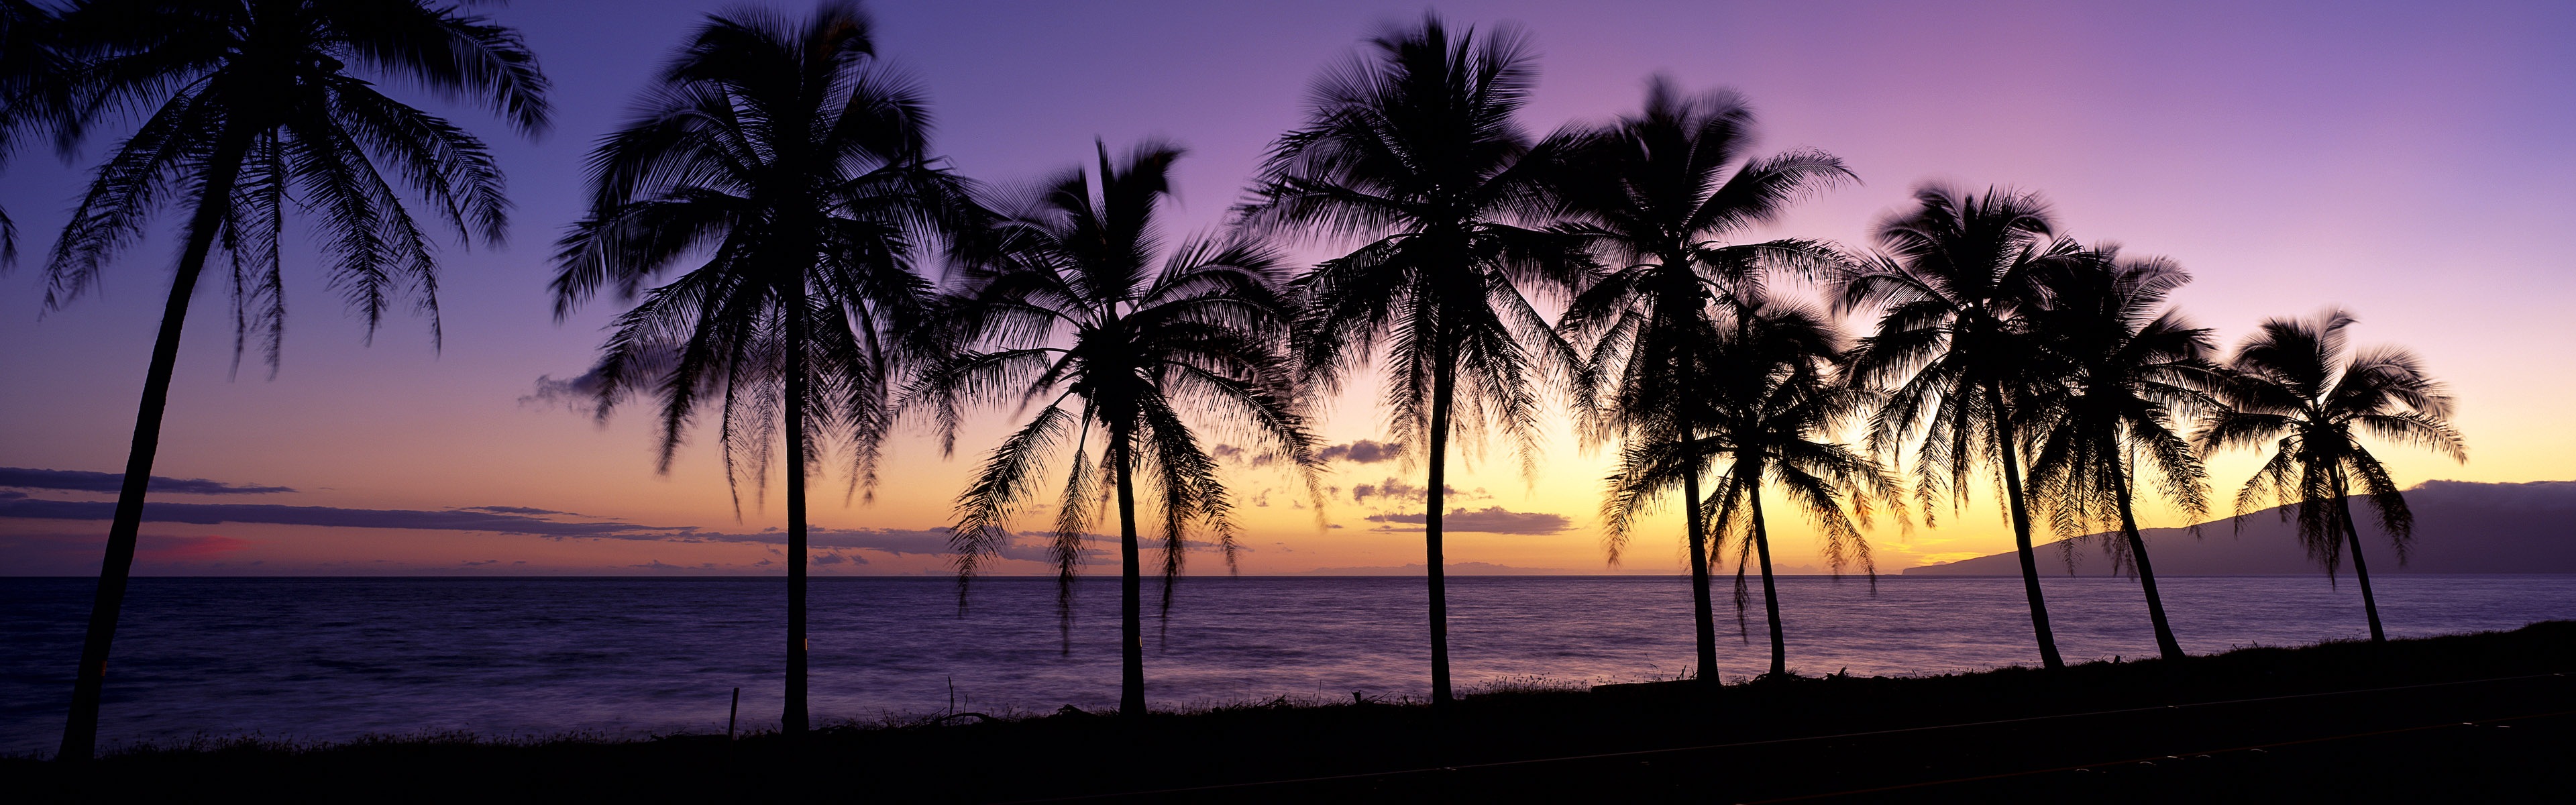 Beautiful beach sunset, Windows 8 panoramic widescreen wallpapers #1 - 3840x1200